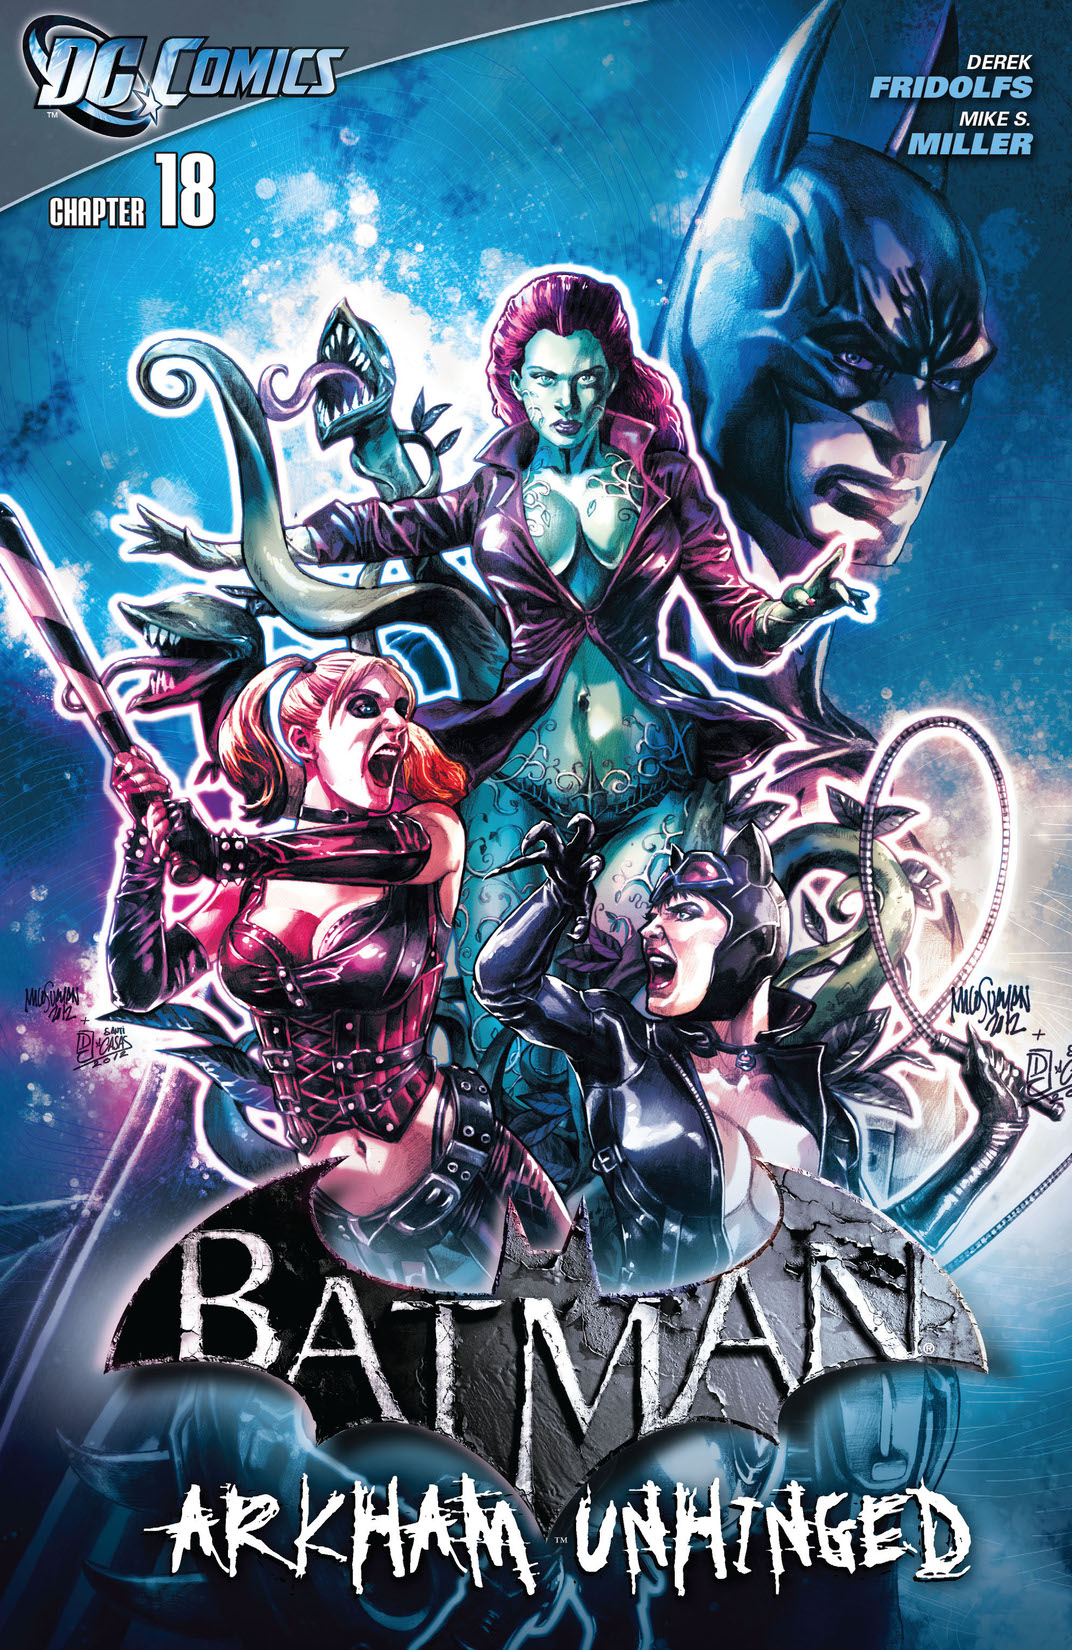 Batman: Arkham Unhinged #18 preview images